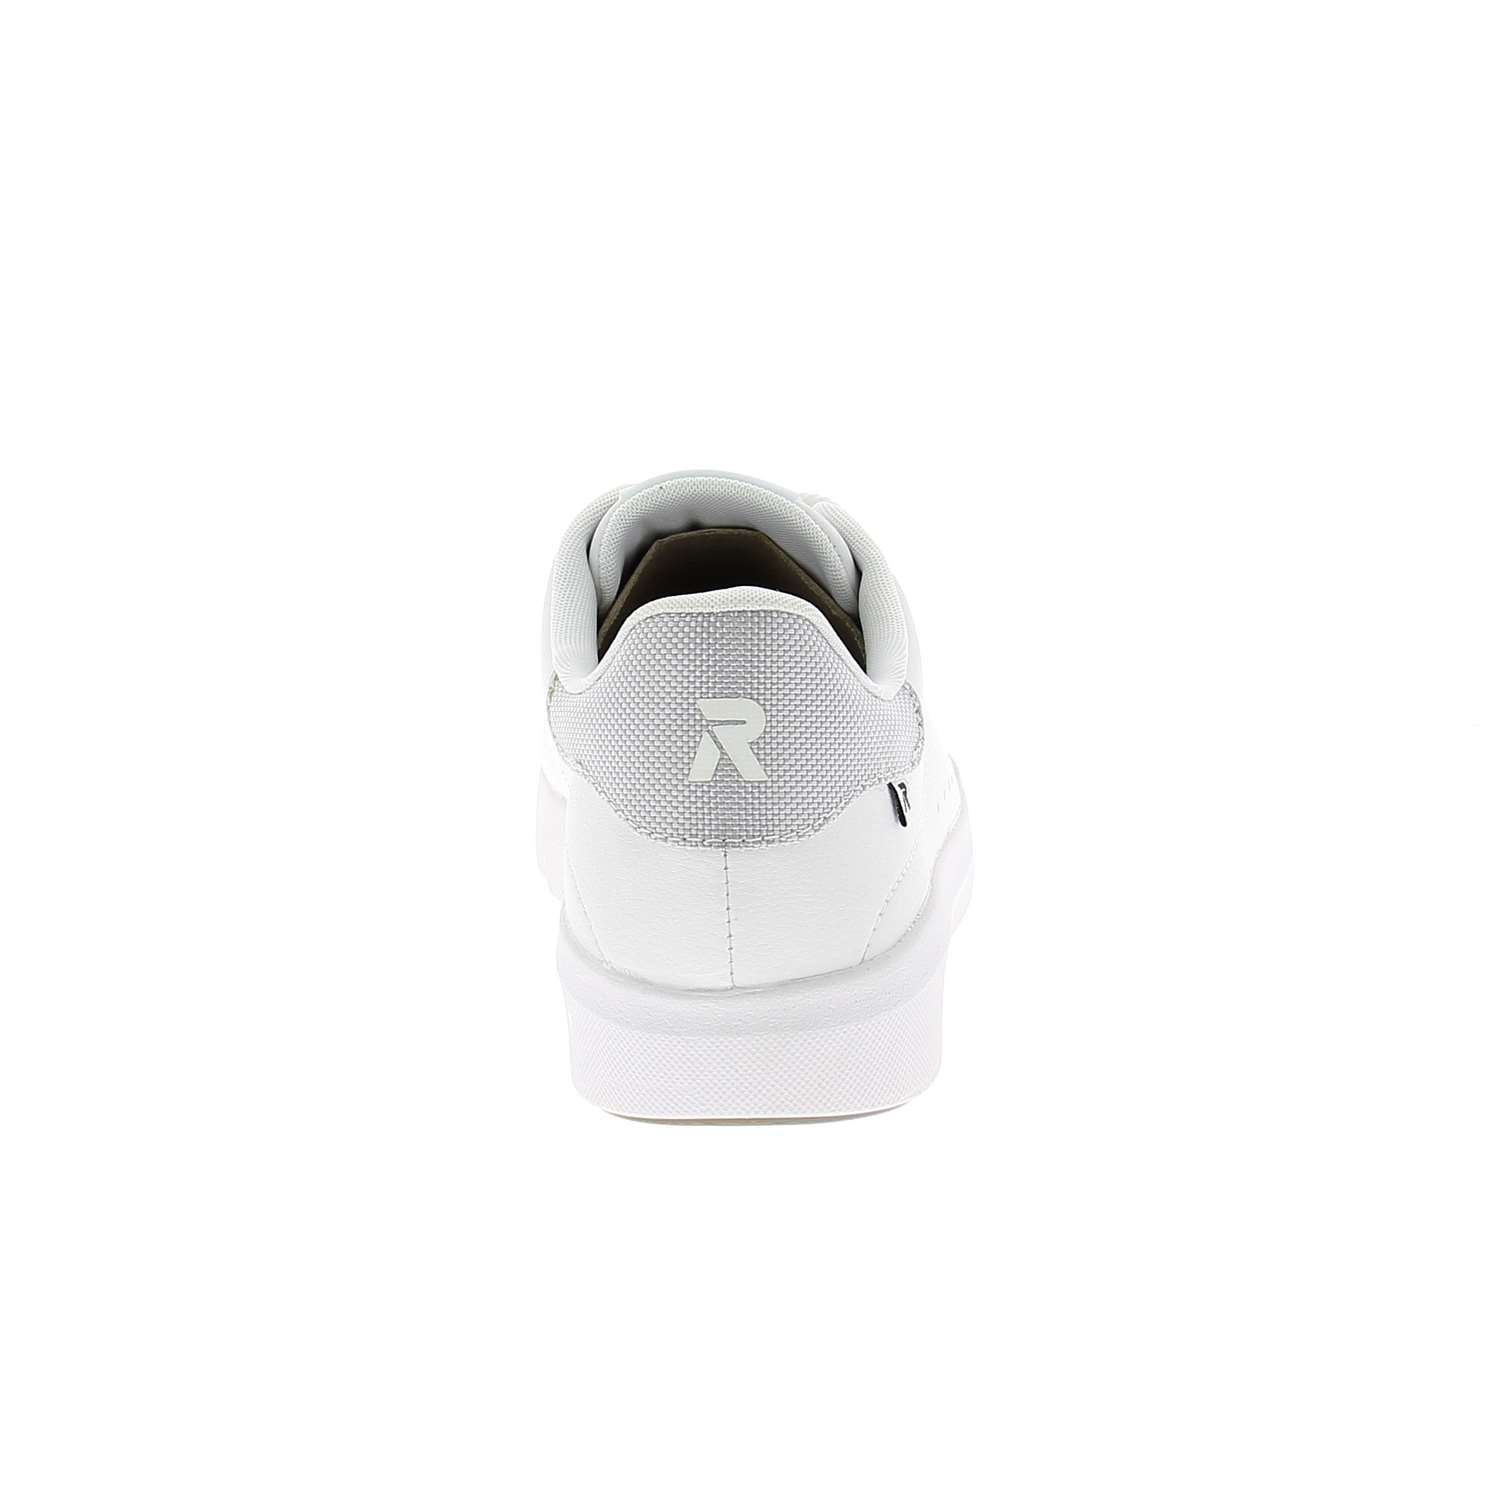 04 - REVOLU - RIEKER - Chaussures à lacets - Cuir